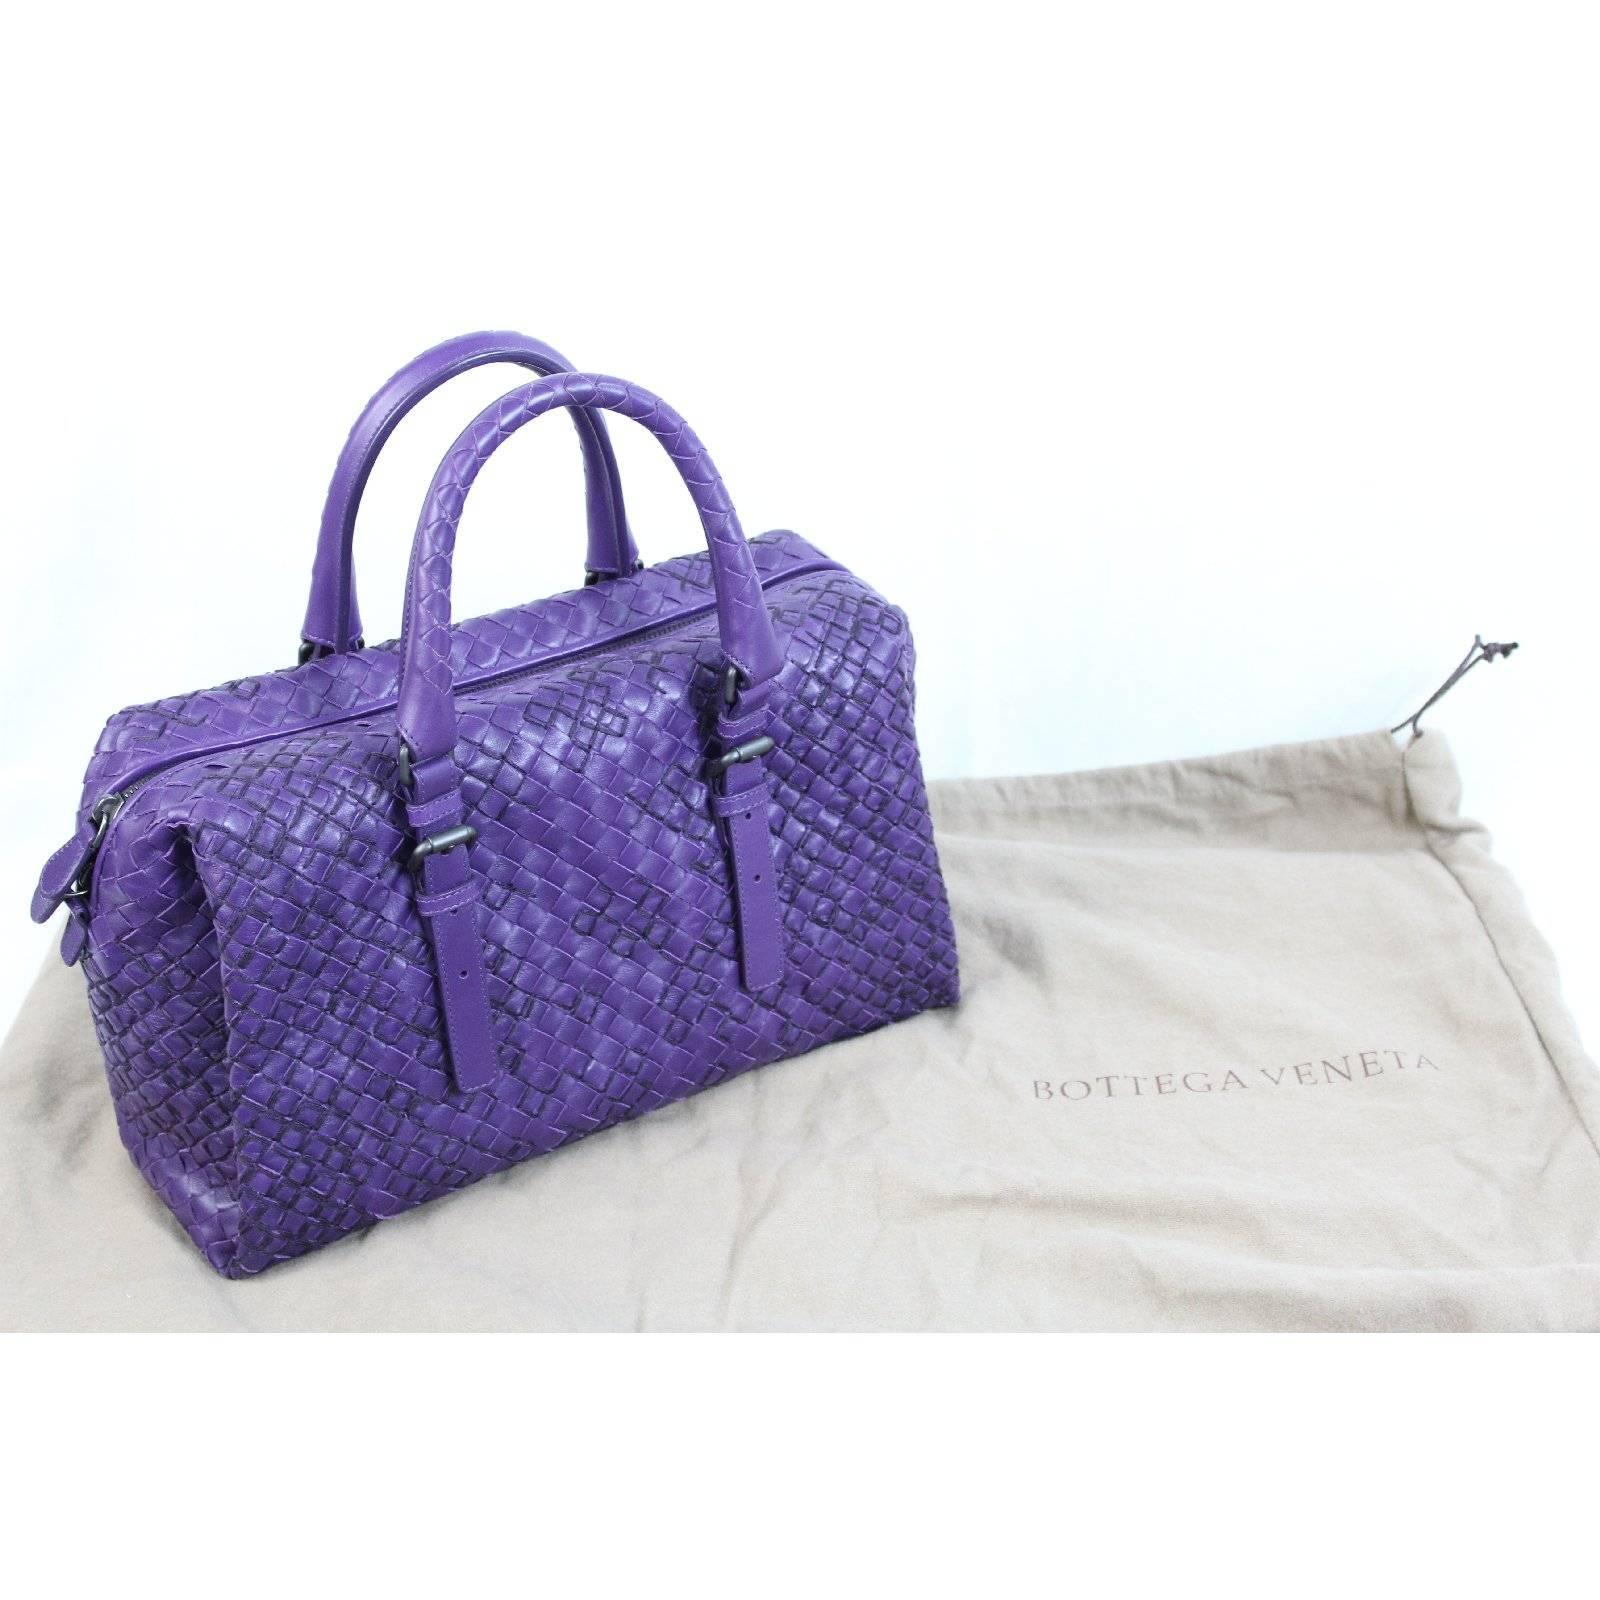 Bottega Veneta Boston leather purple handbag bag 2003s like new made in italy 2